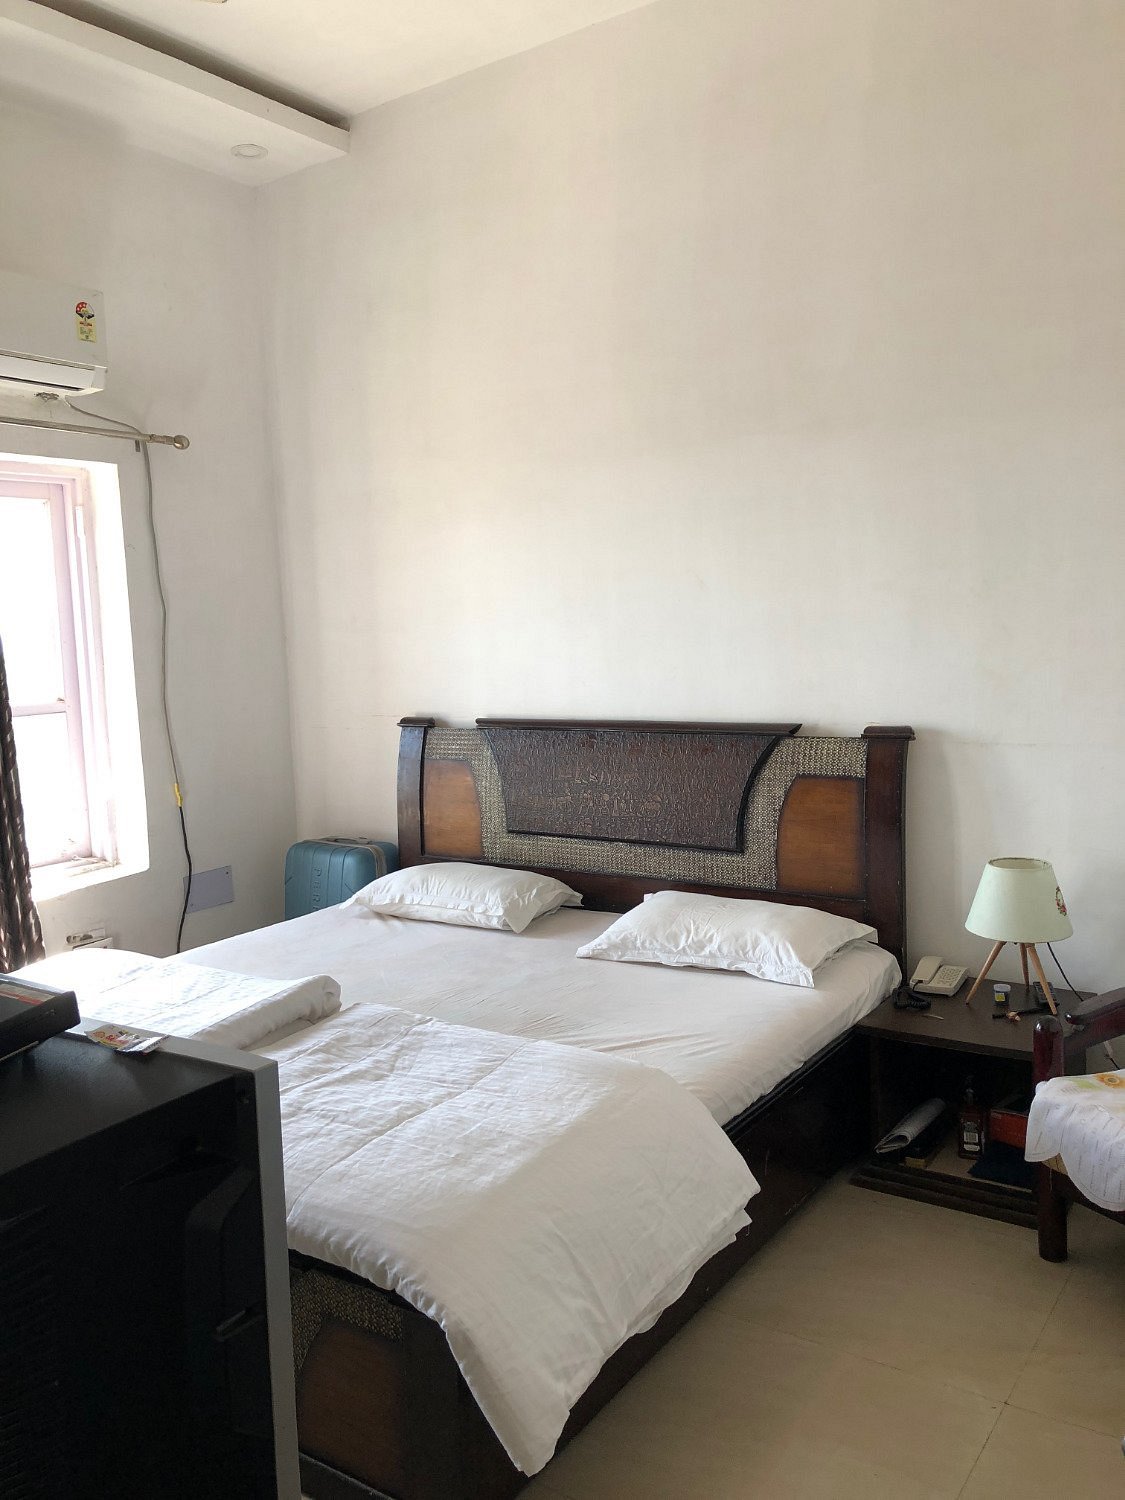 MPT Tana Bana, Chanderi Rooms: Pictures & Reviews - Tripadvisor